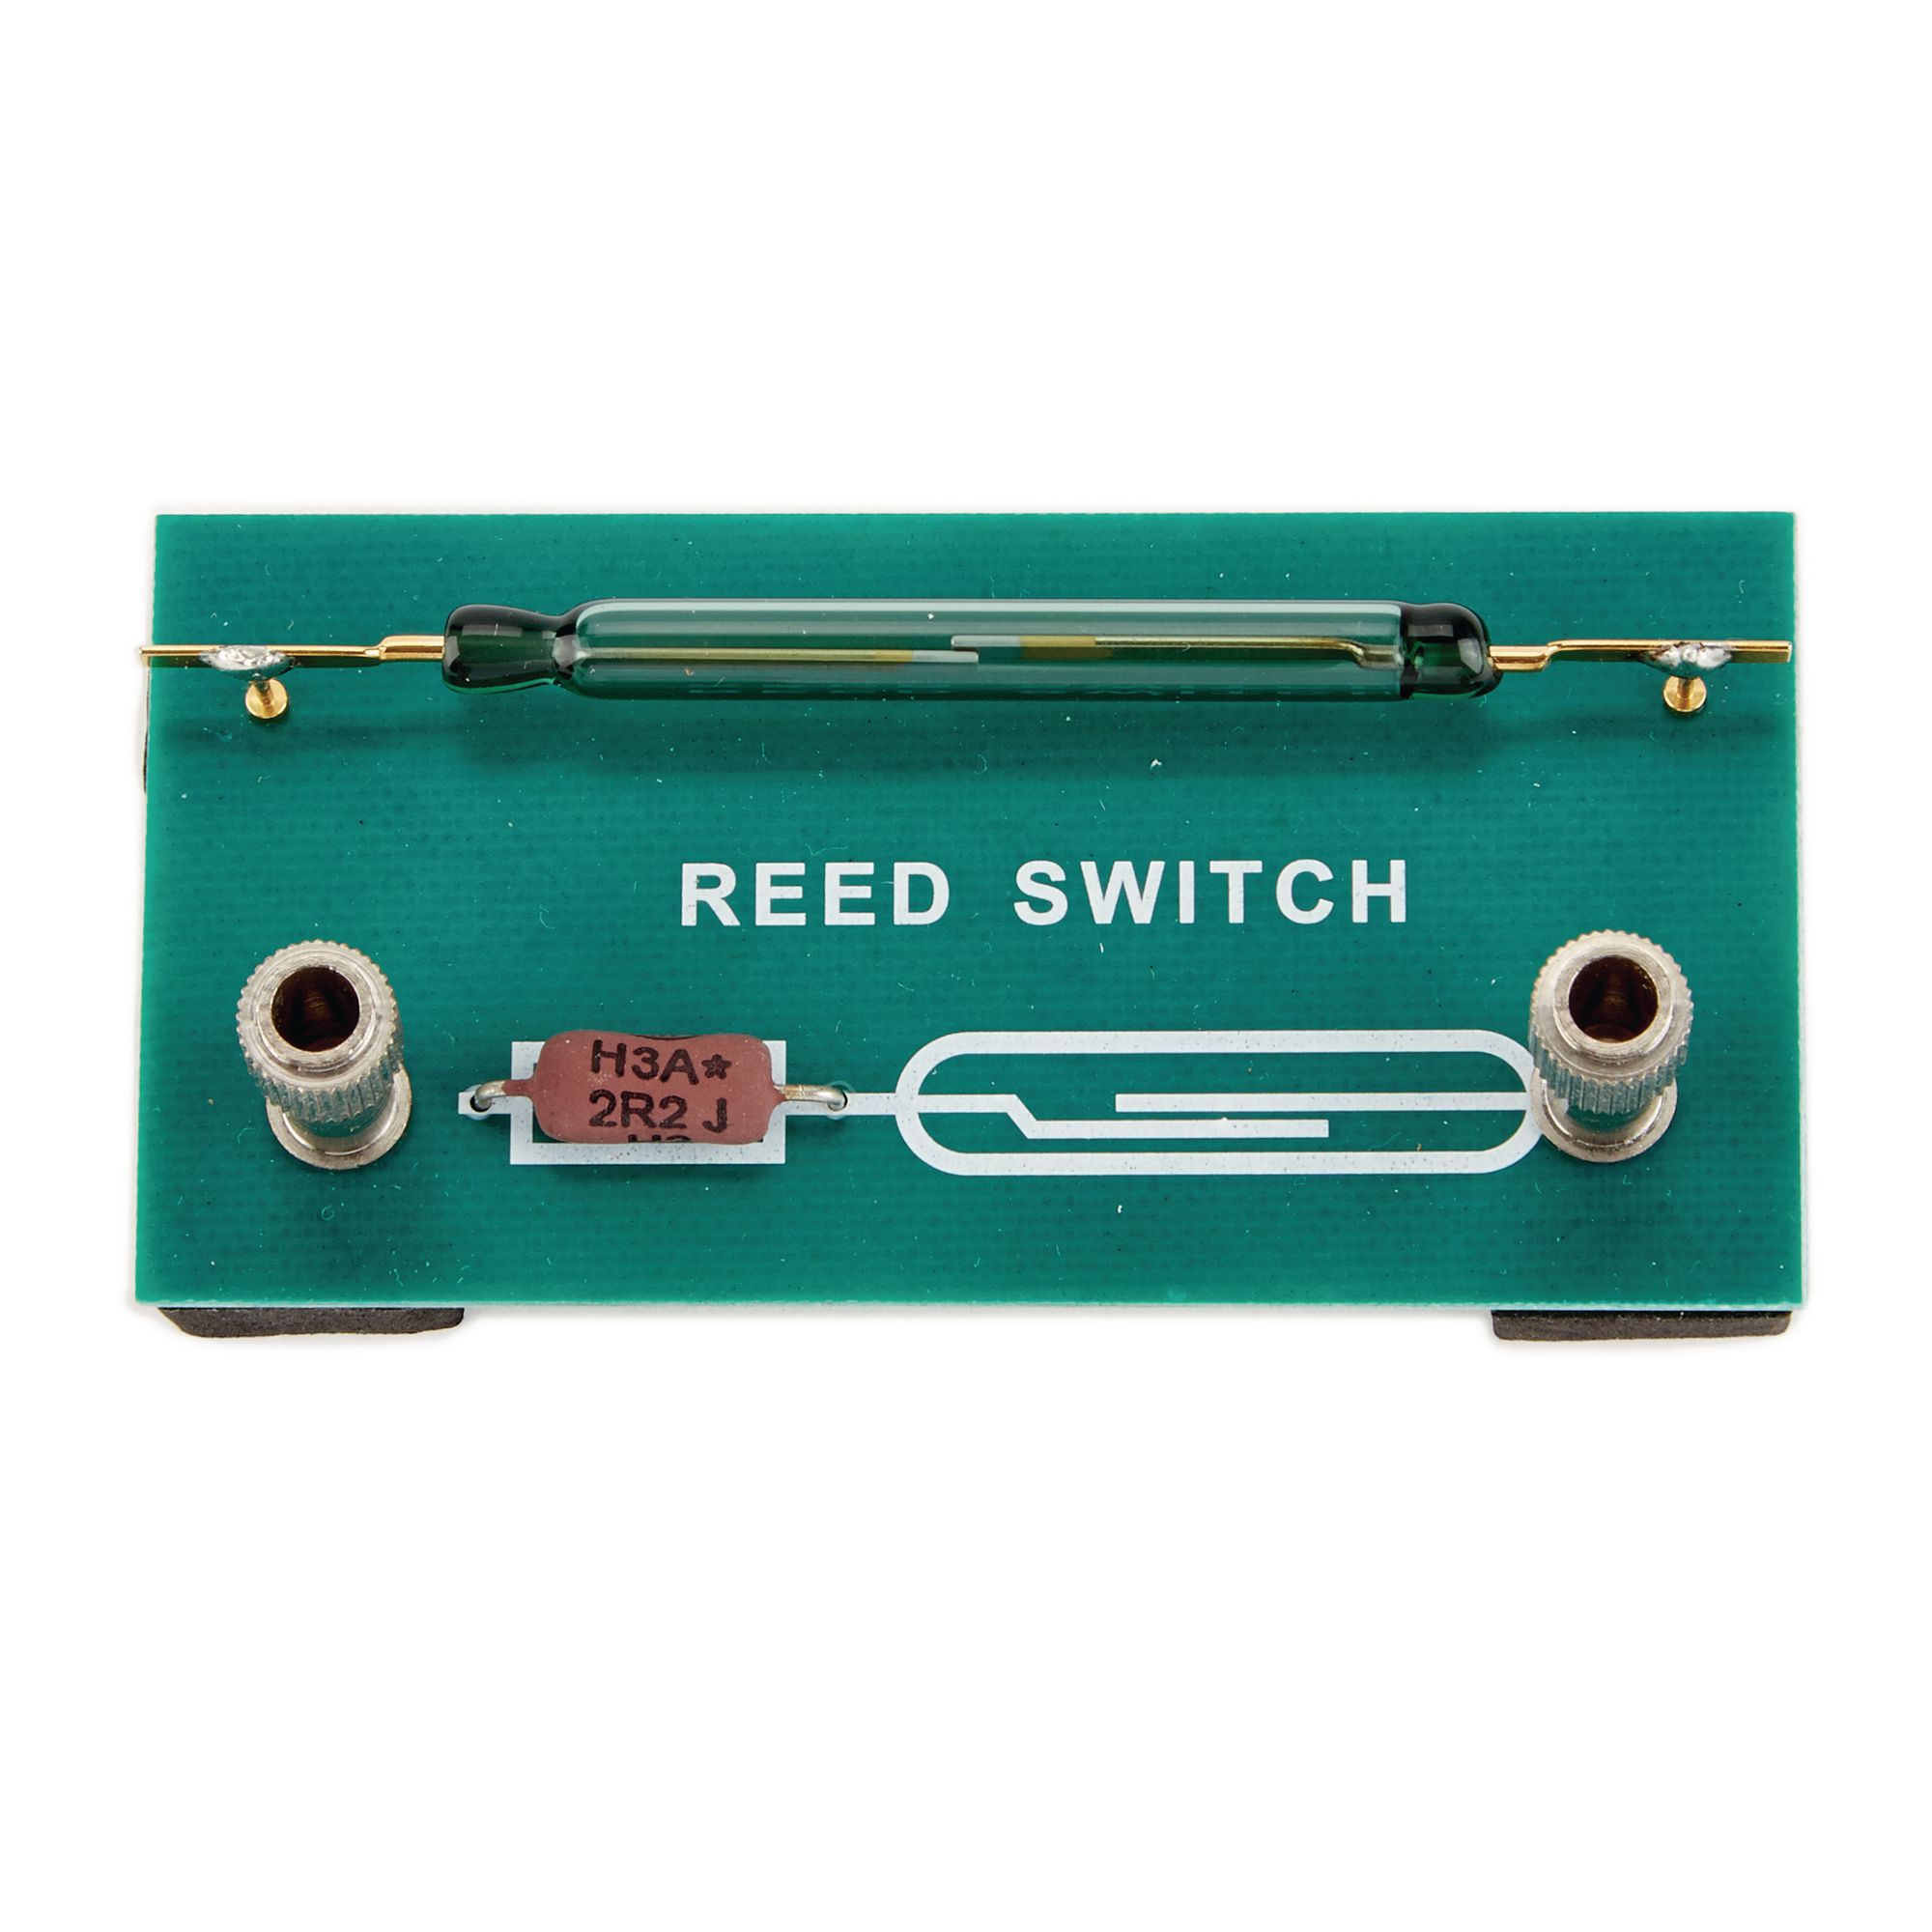 Ismec 11-13 Reed Switch (4mm)